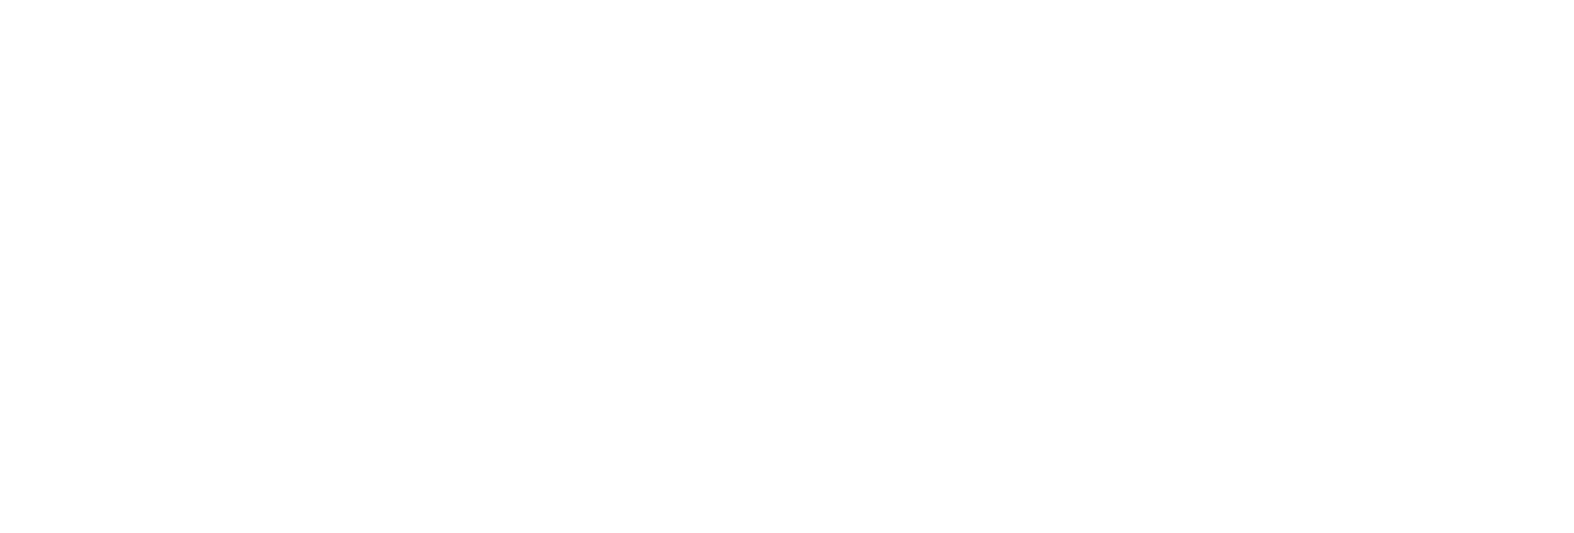 Jetblue Airways
 logo large for dark backgrounds (transparent PNG)